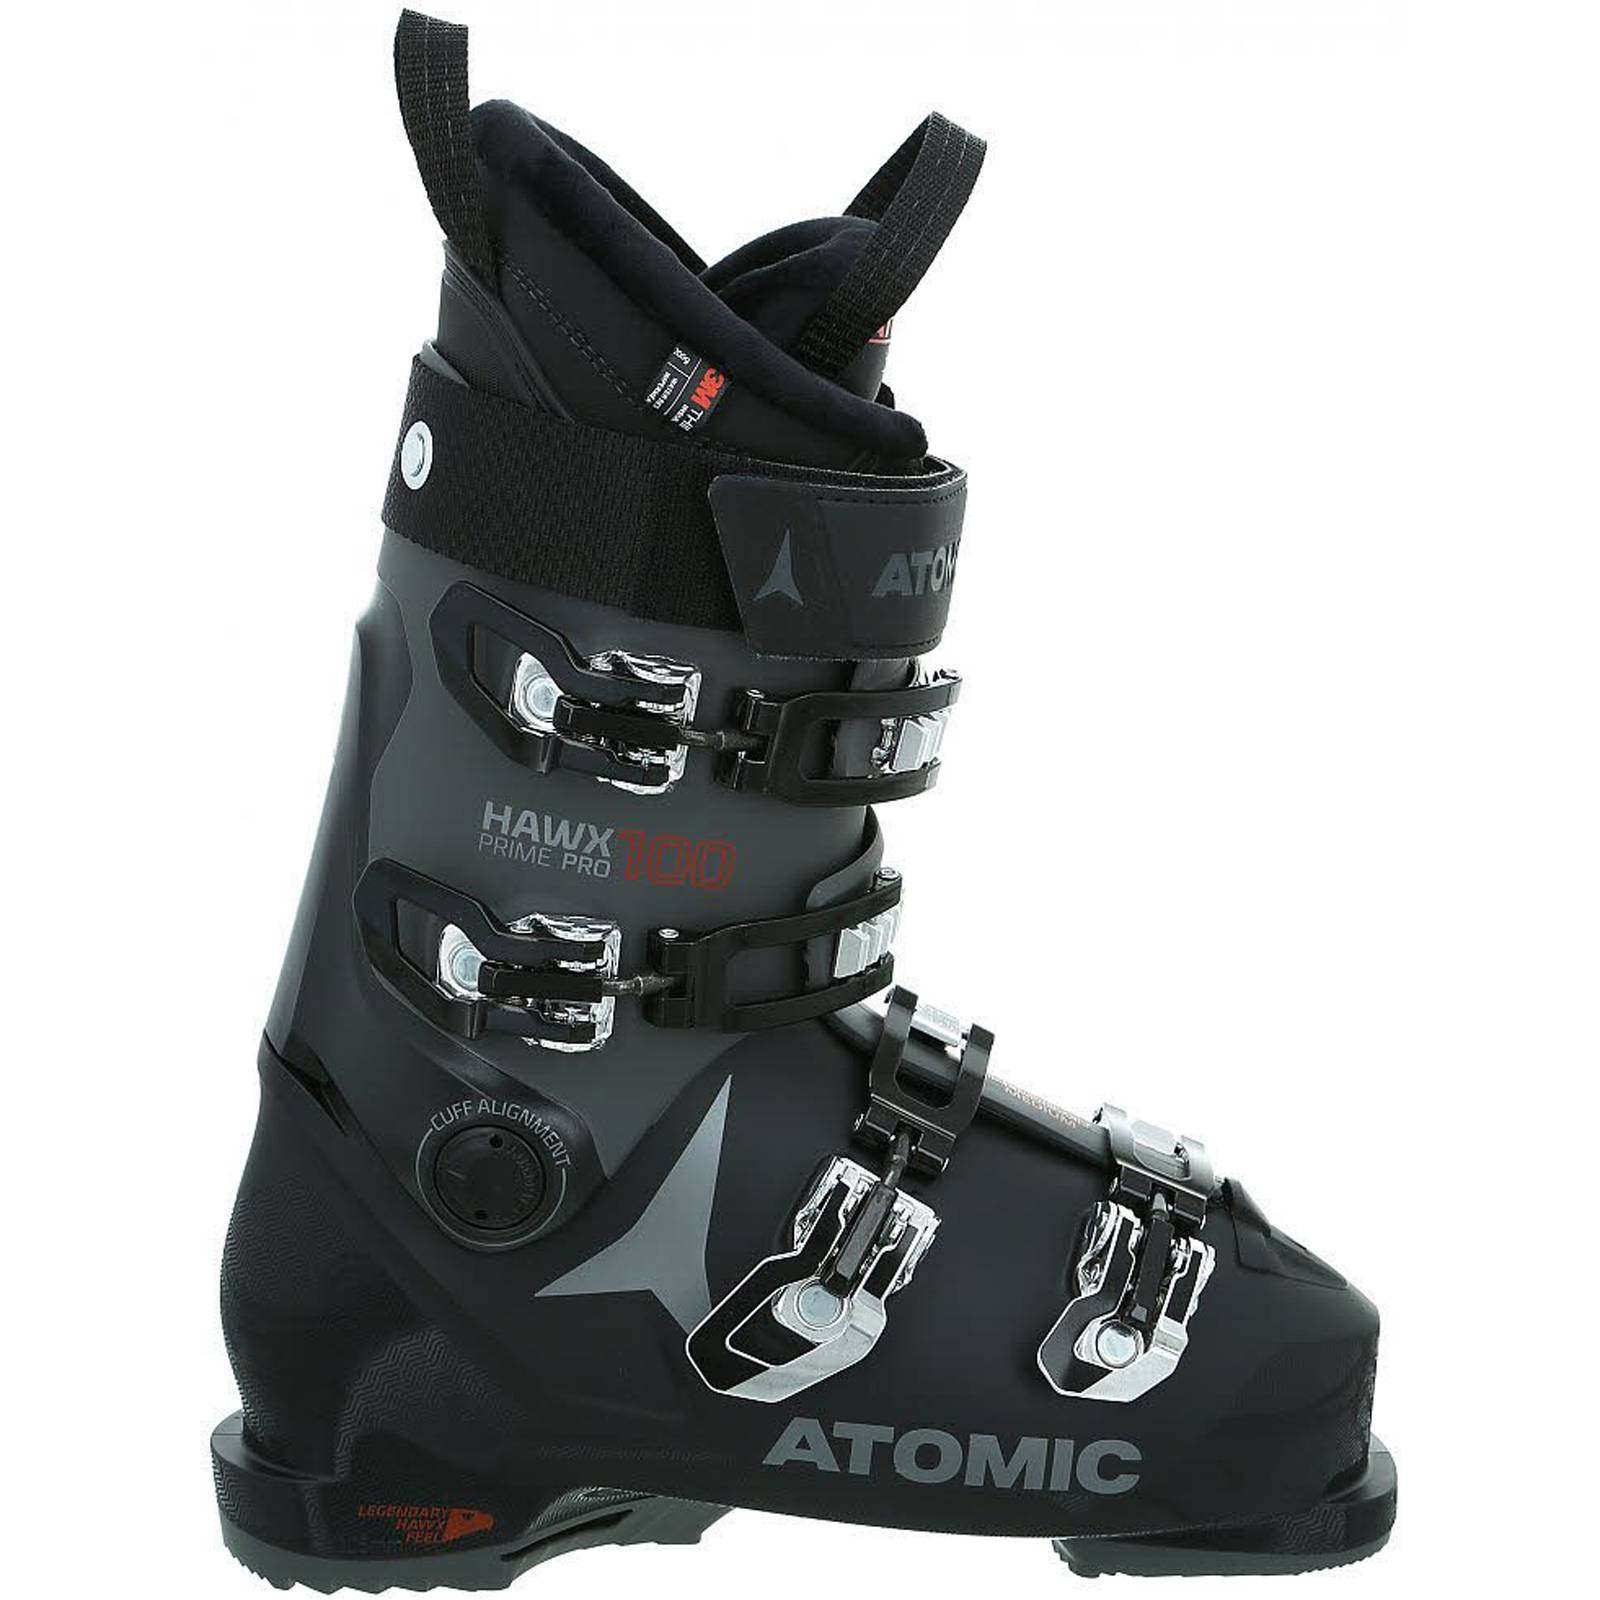 ATOMIC Hawx Prime Pro 100 Skischuhe 2020/21